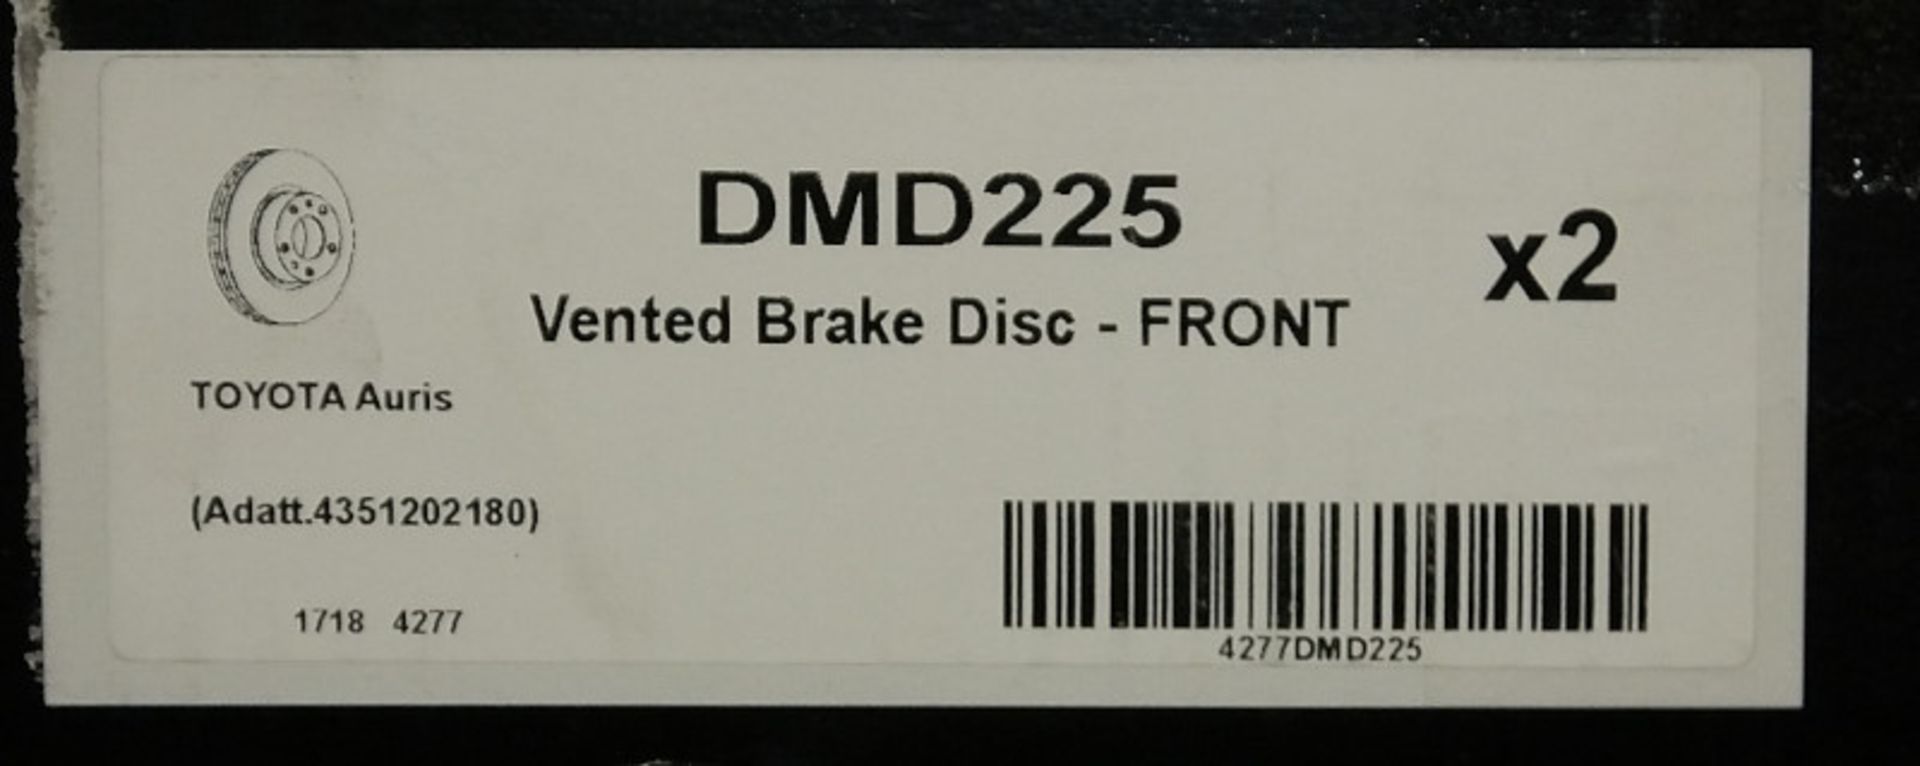 3x Drivemaster Brake Discs - Models - DMD225, DMD010 & DMD222 - Image 2 of 4